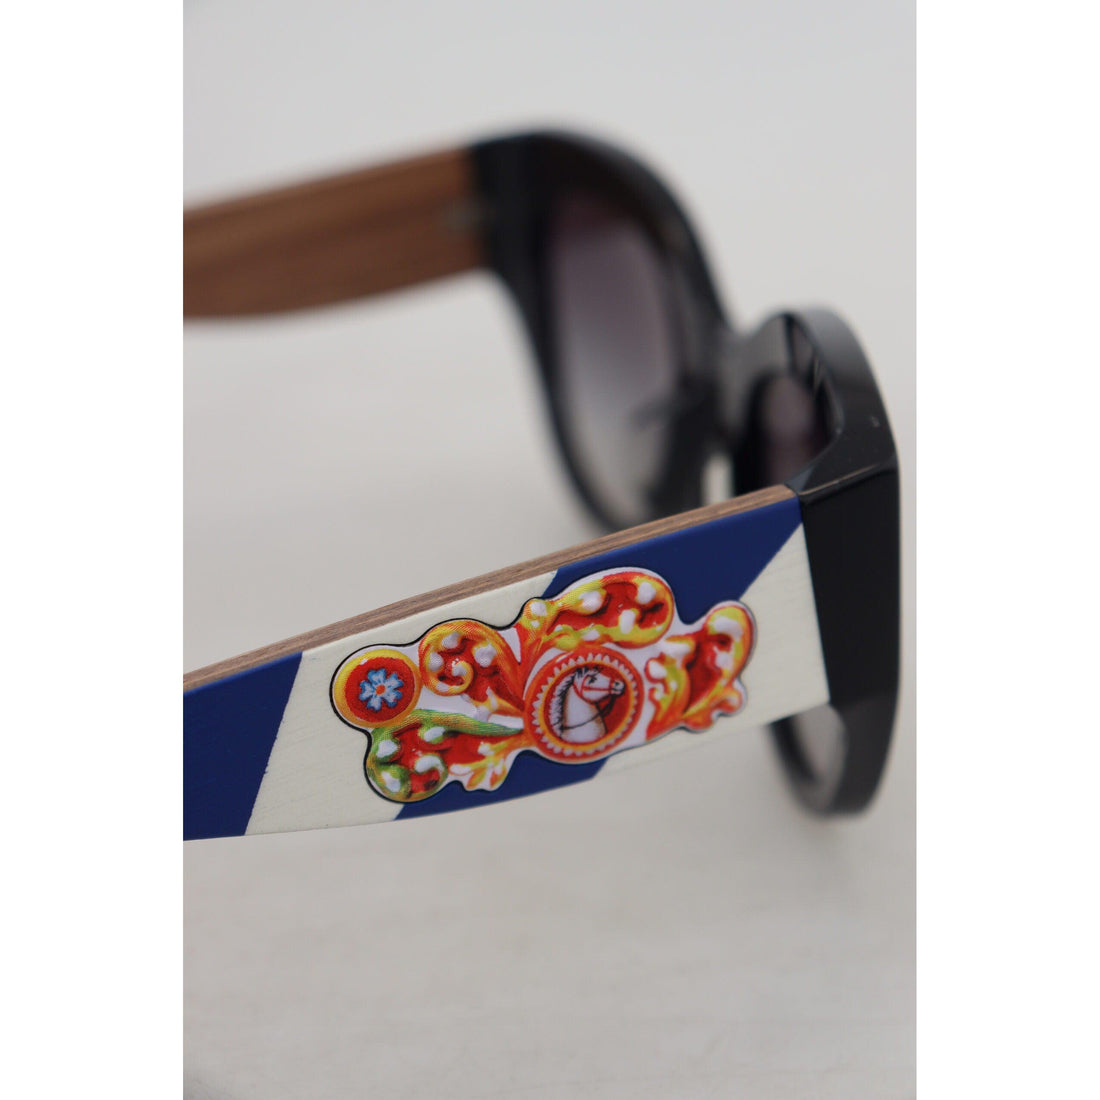 Dolce & Gabbana Black DG4278F Acetate Frame Carretto Cat Eye Sunglasses